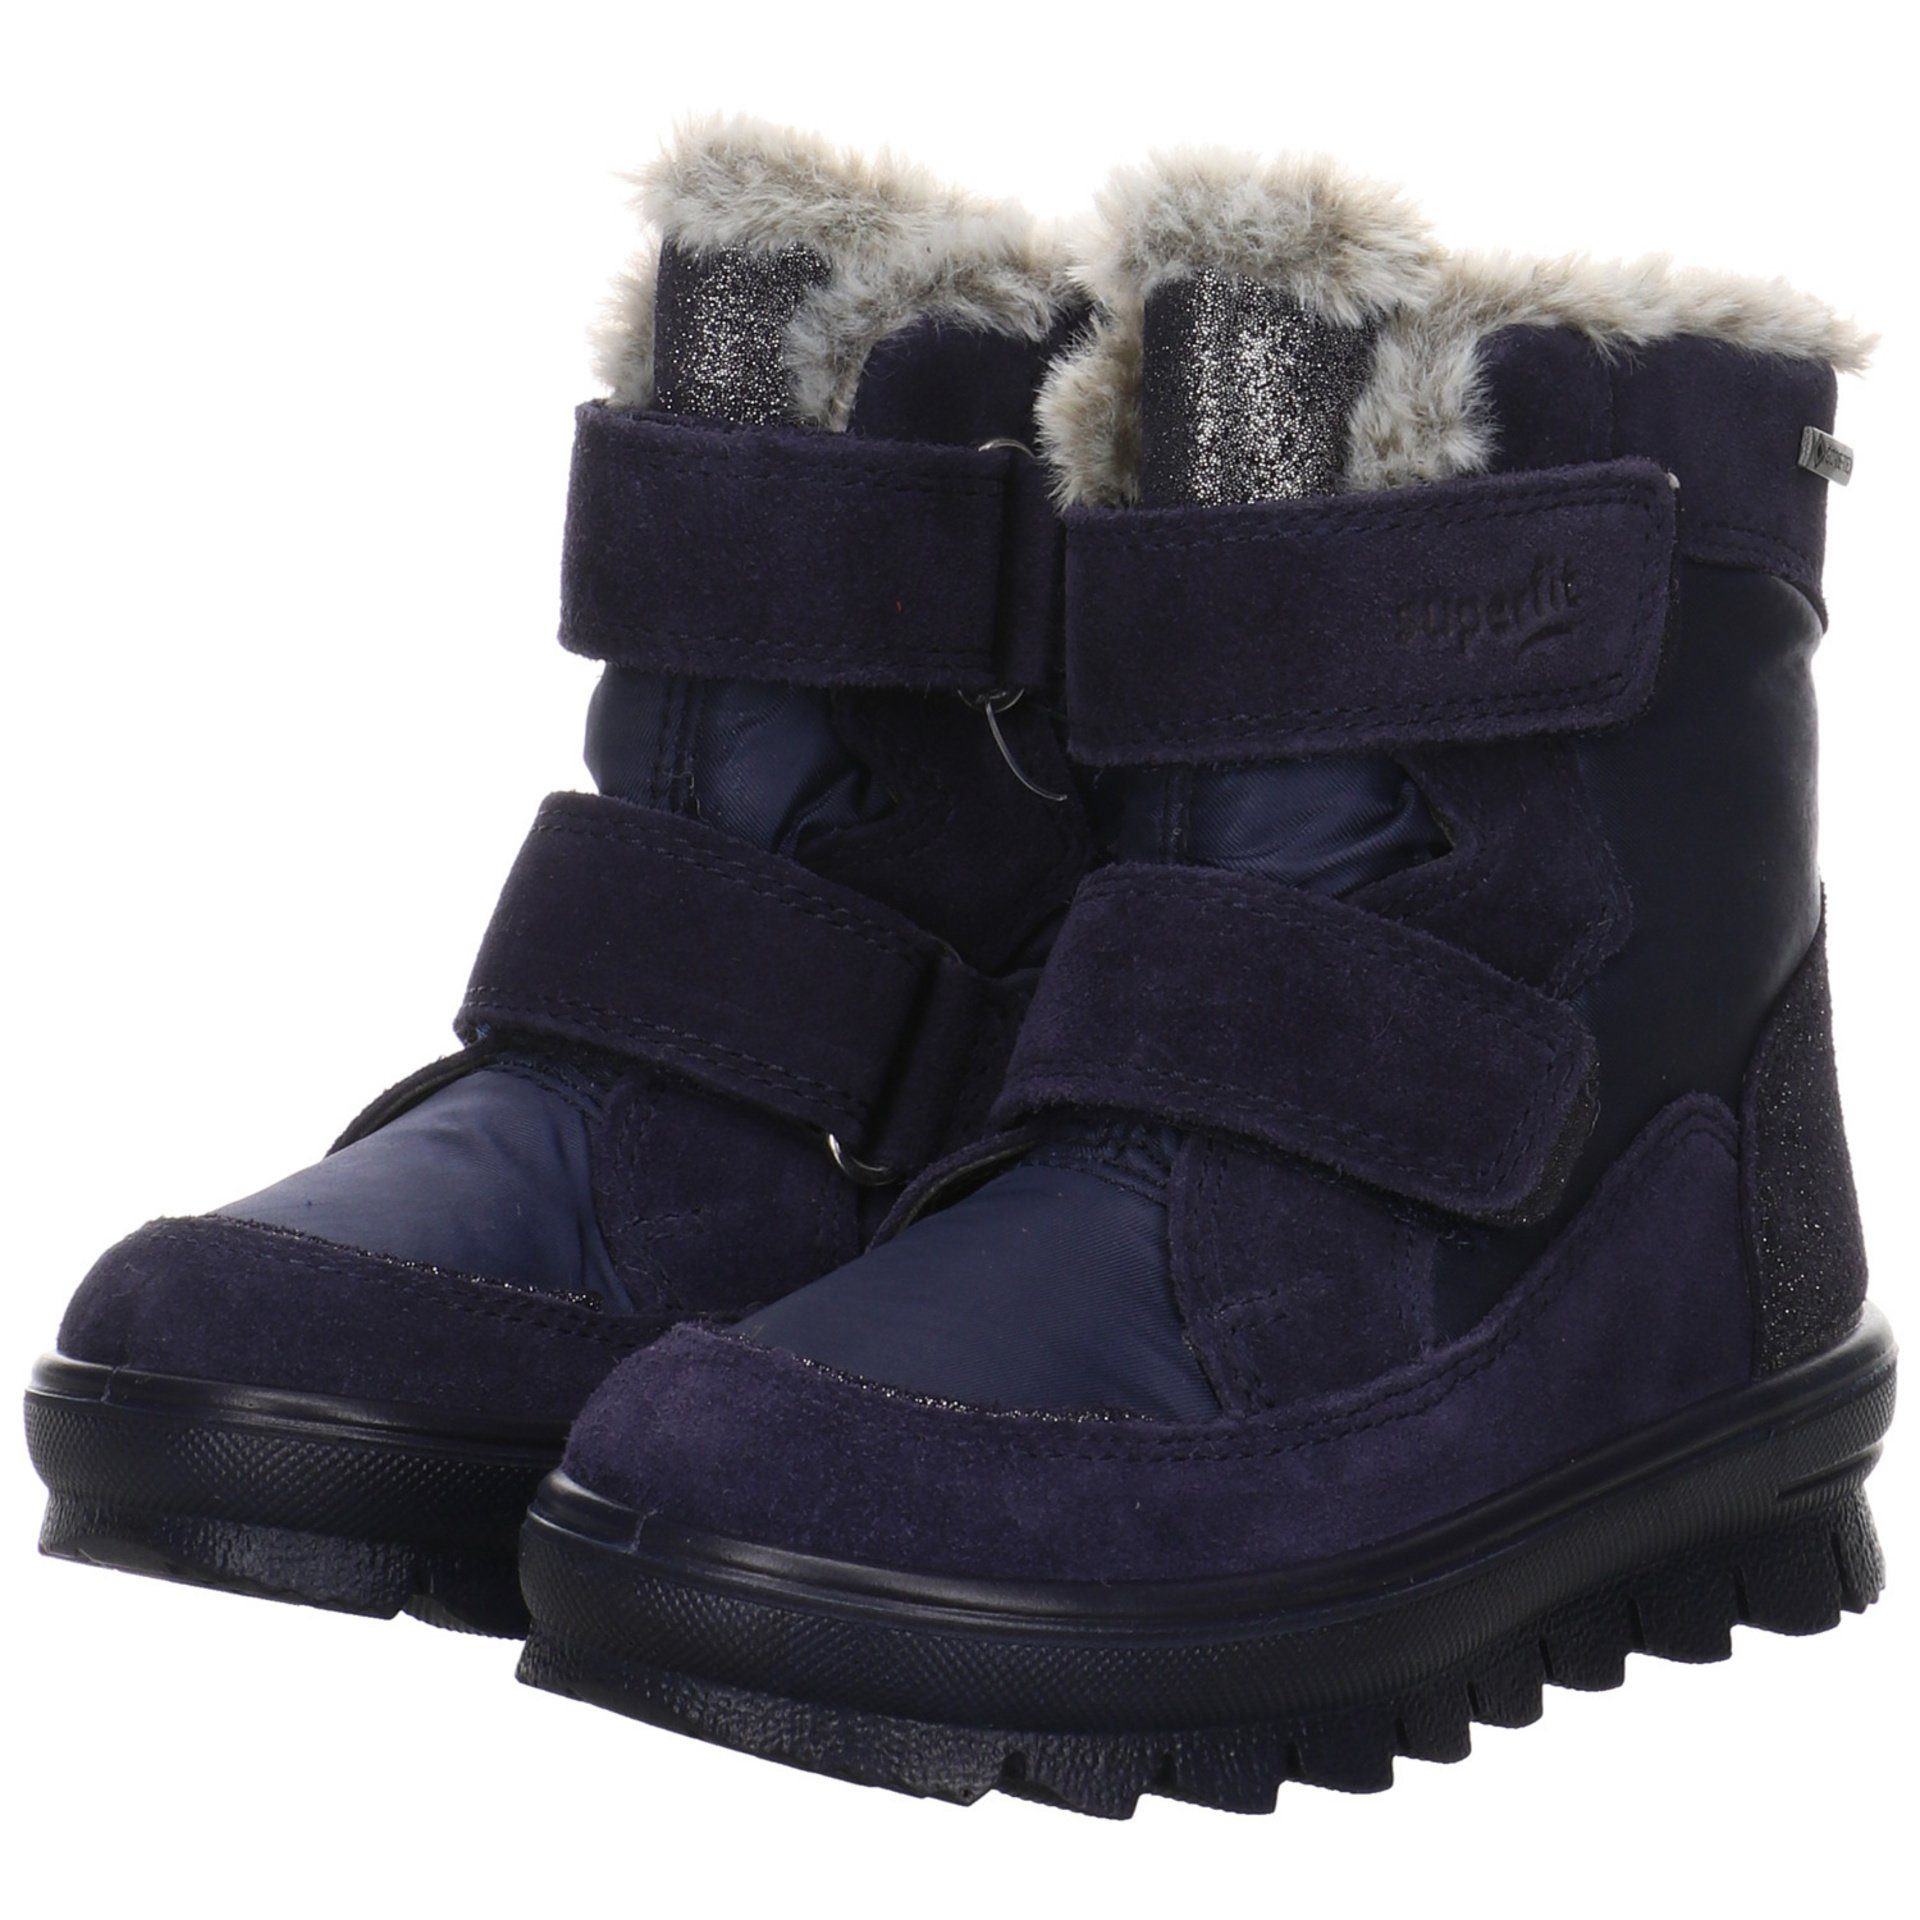 Superfit Flavia Boots blau Leder-/Textilkombination Leder-/Textilkombination uni Winterboots